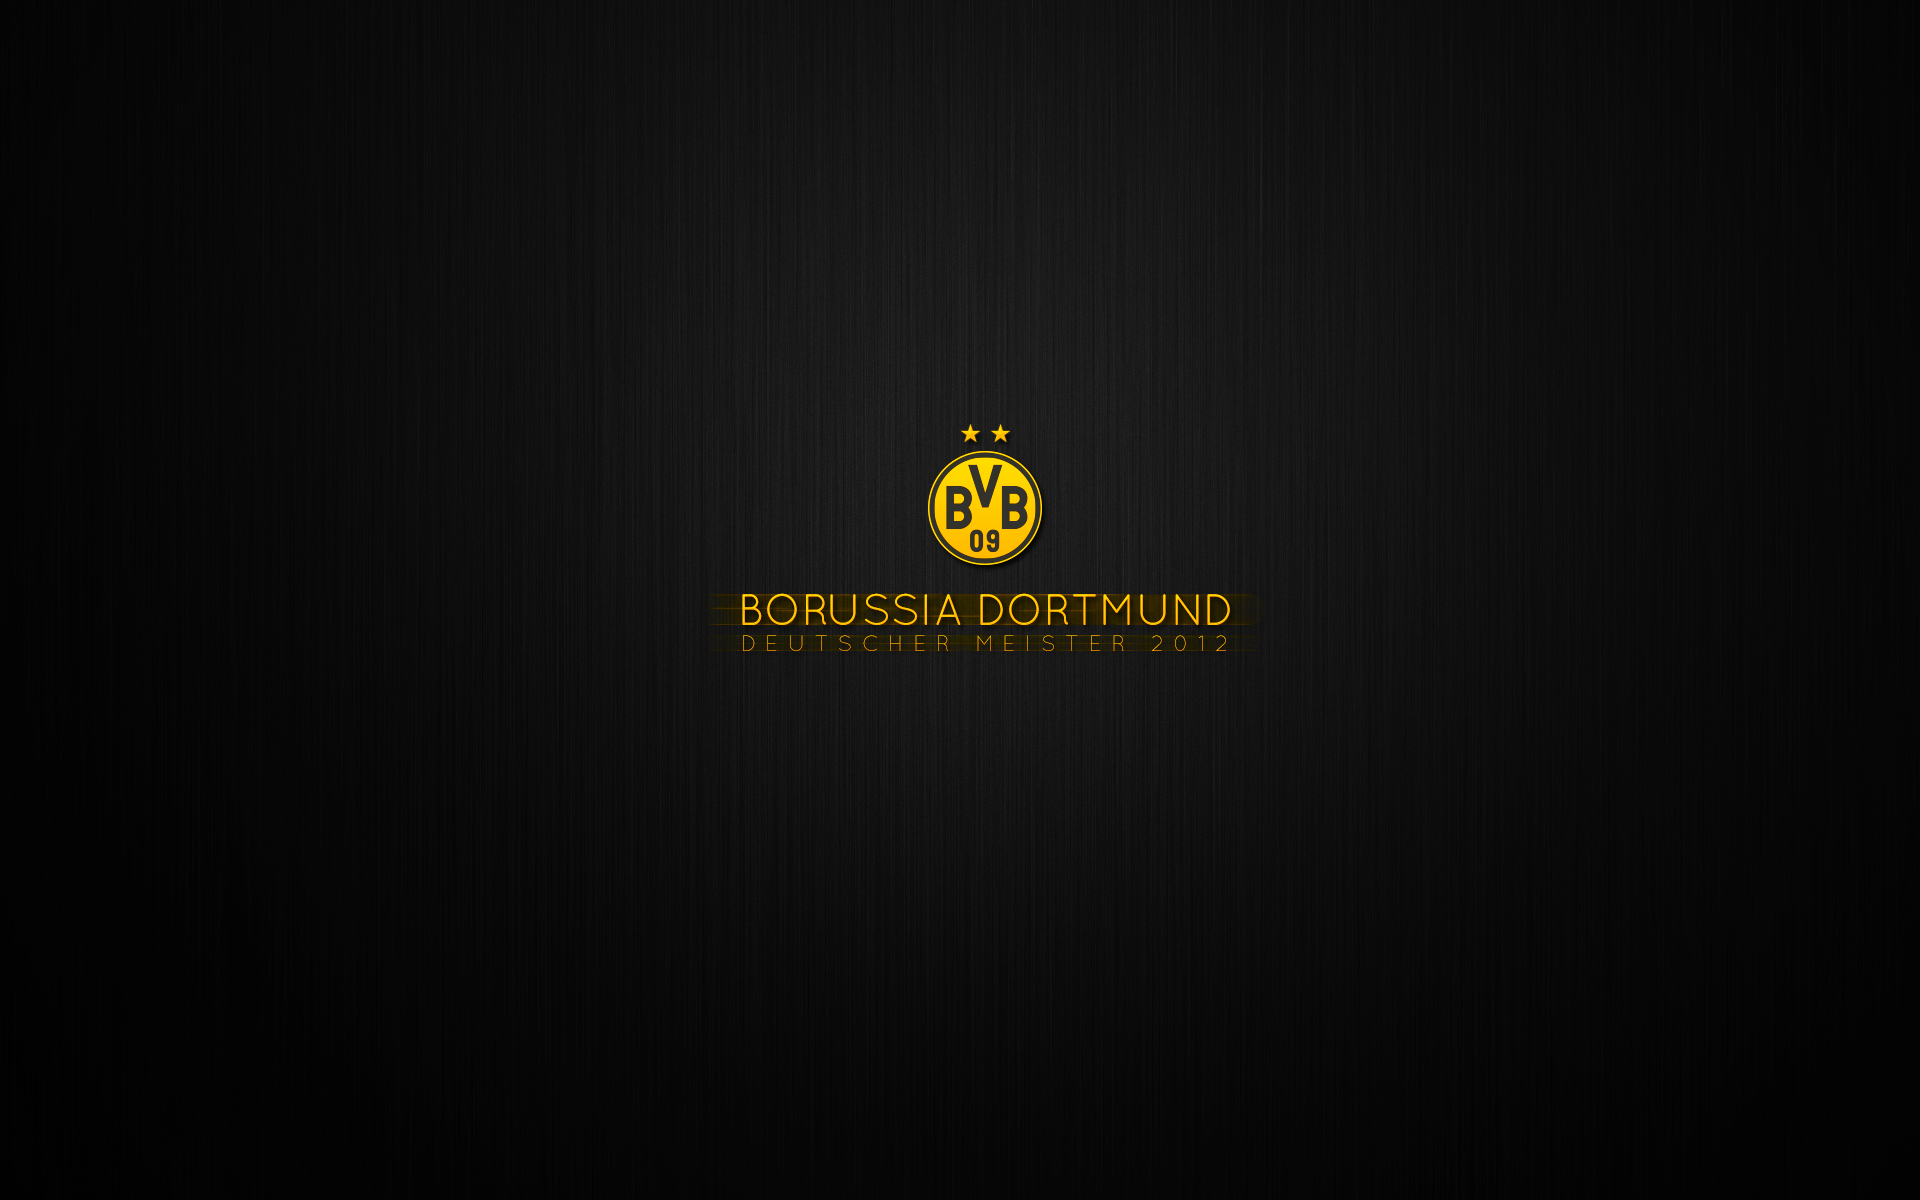 Bvb Borussia Dortmund Wallpaper 2 By Pname On Deviantart